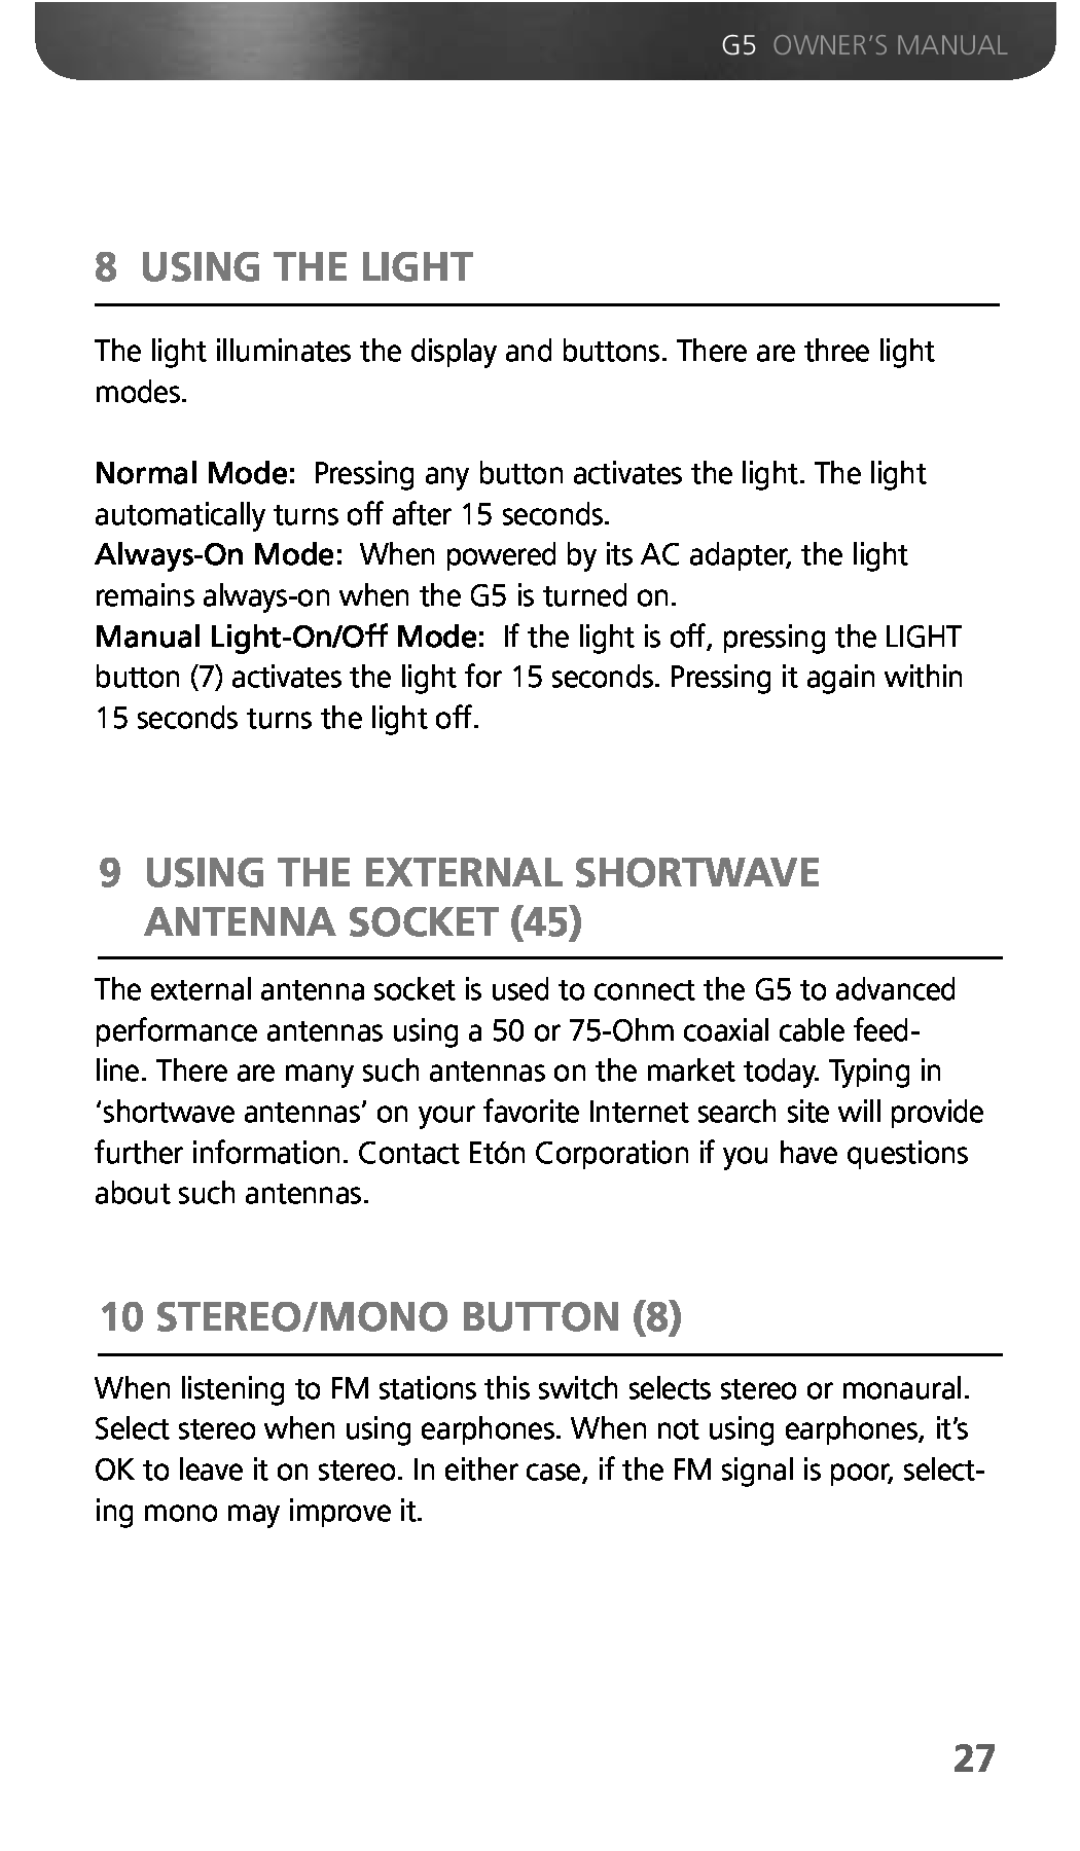 Eton G5 owner manual Using The Light, Stereo/Mono Button, Using The External Shortwave Antenna Socket 